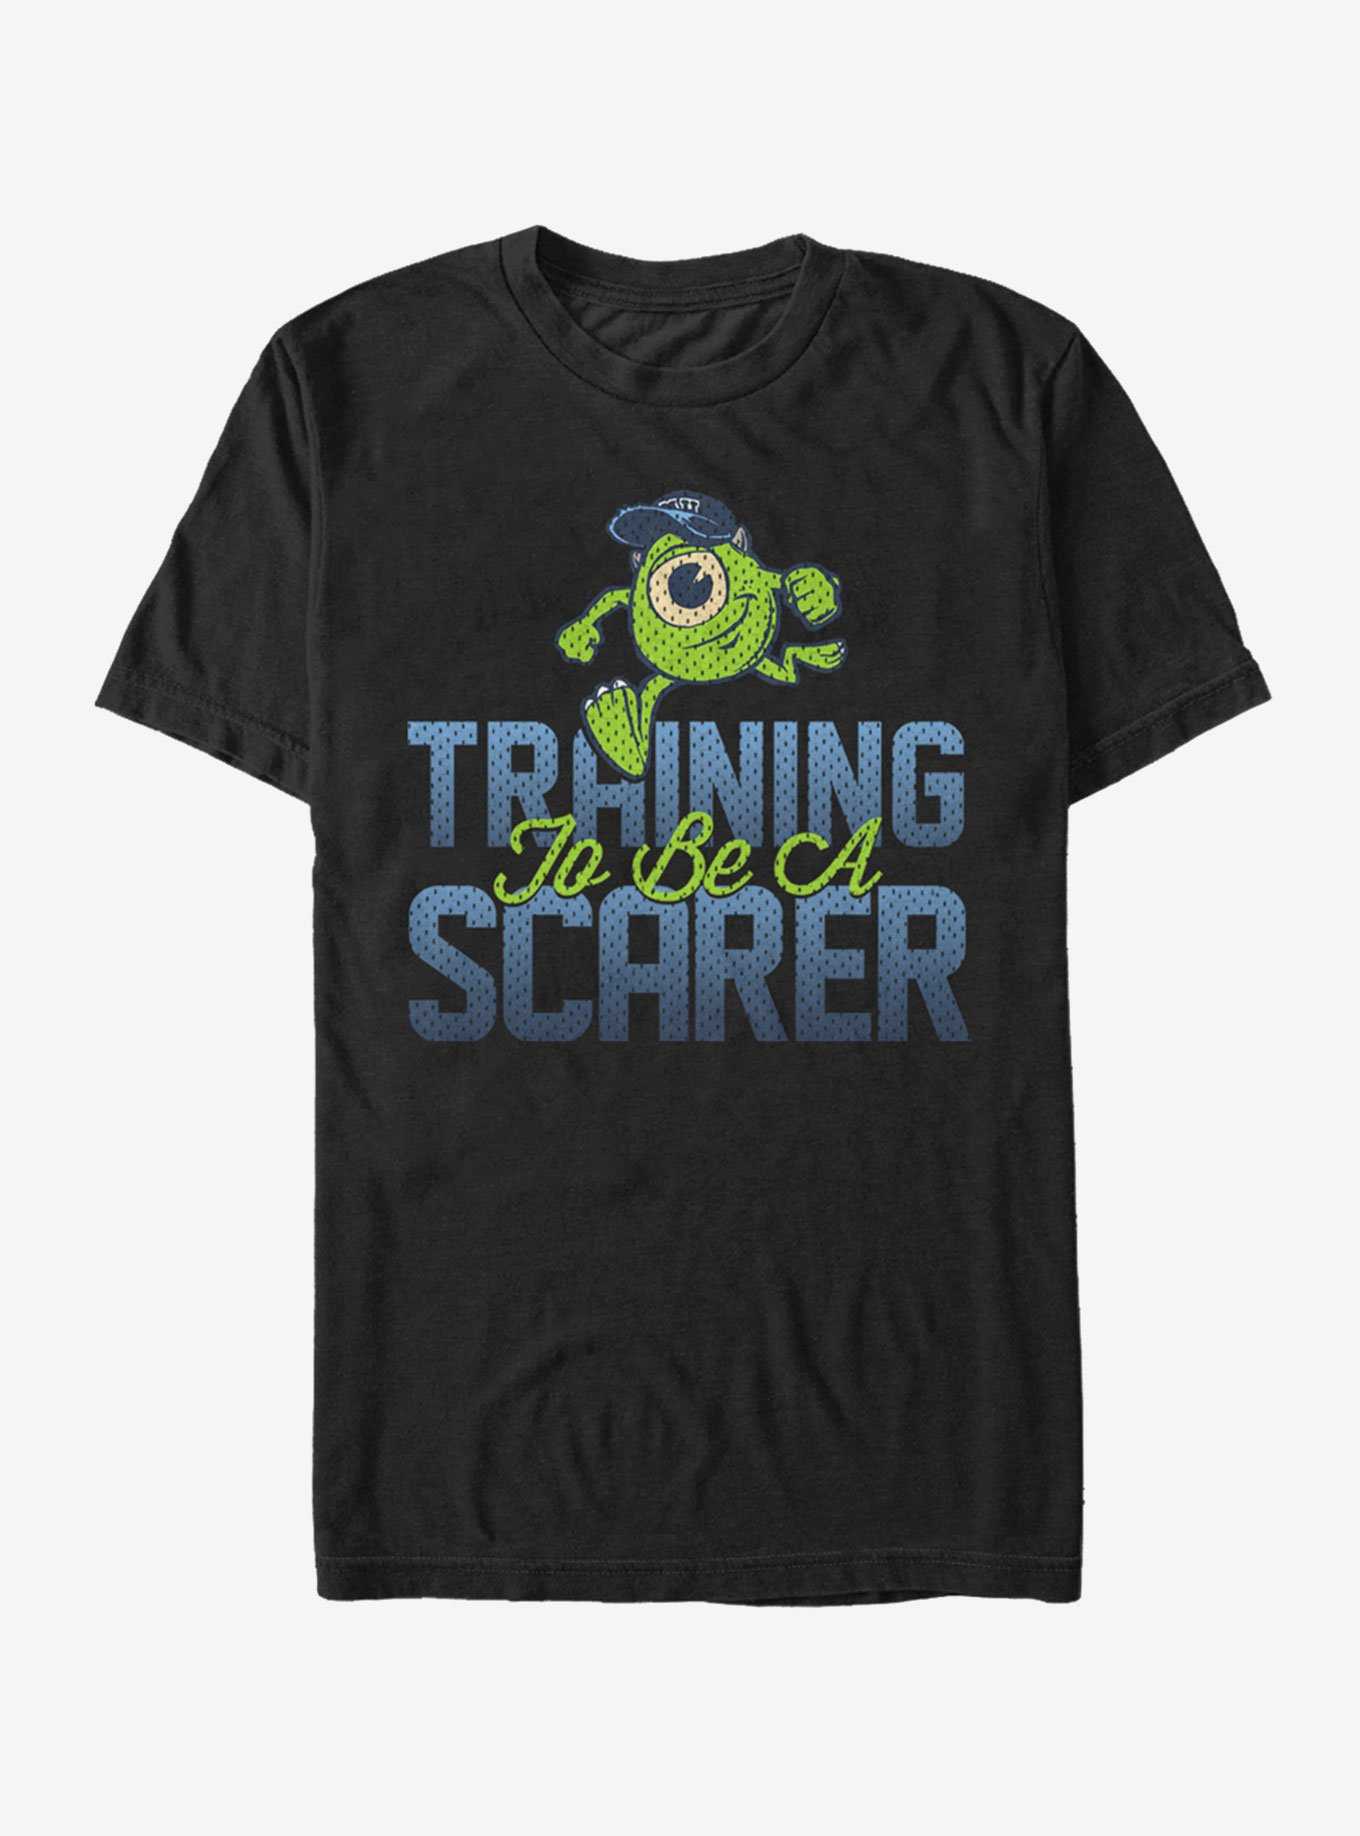 Disney Pixar Monsters, Inc. Training To Be A Scarer T-Shirt, , hi-res